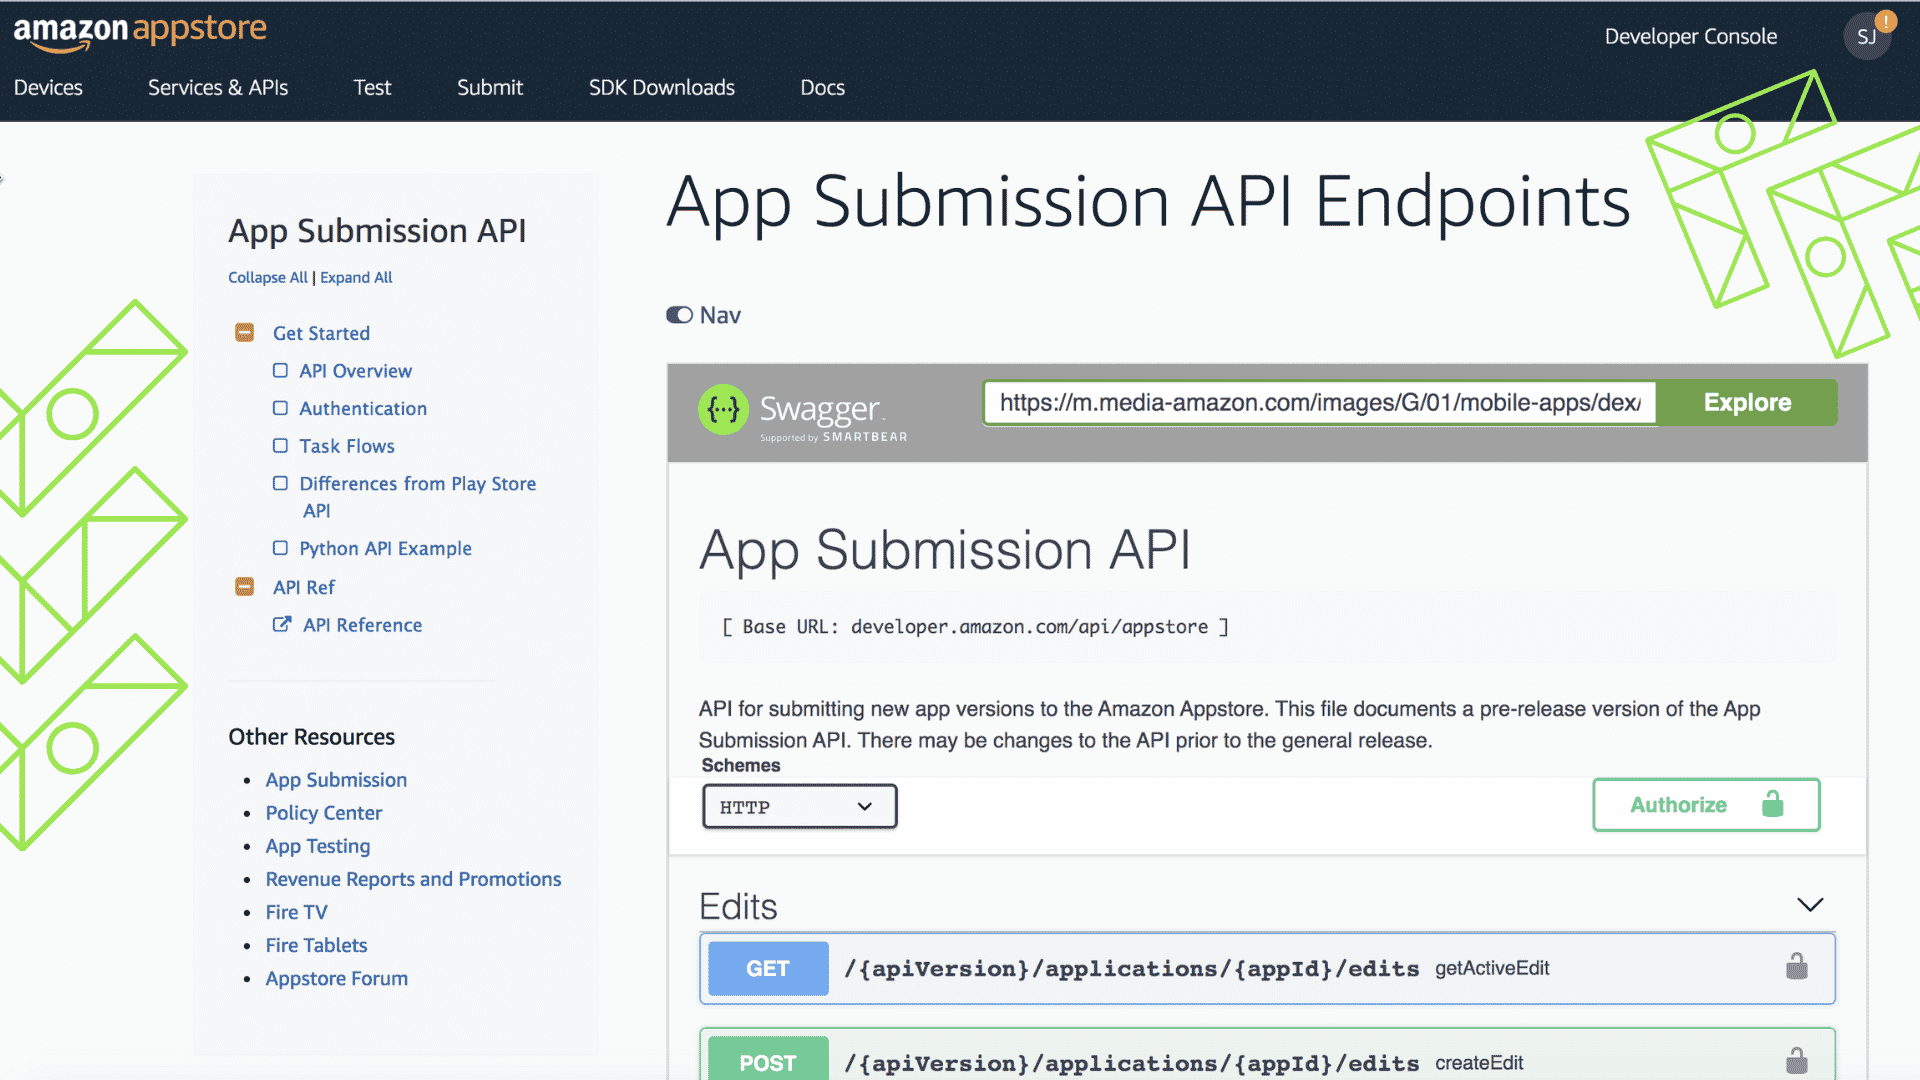 Embedded API Design